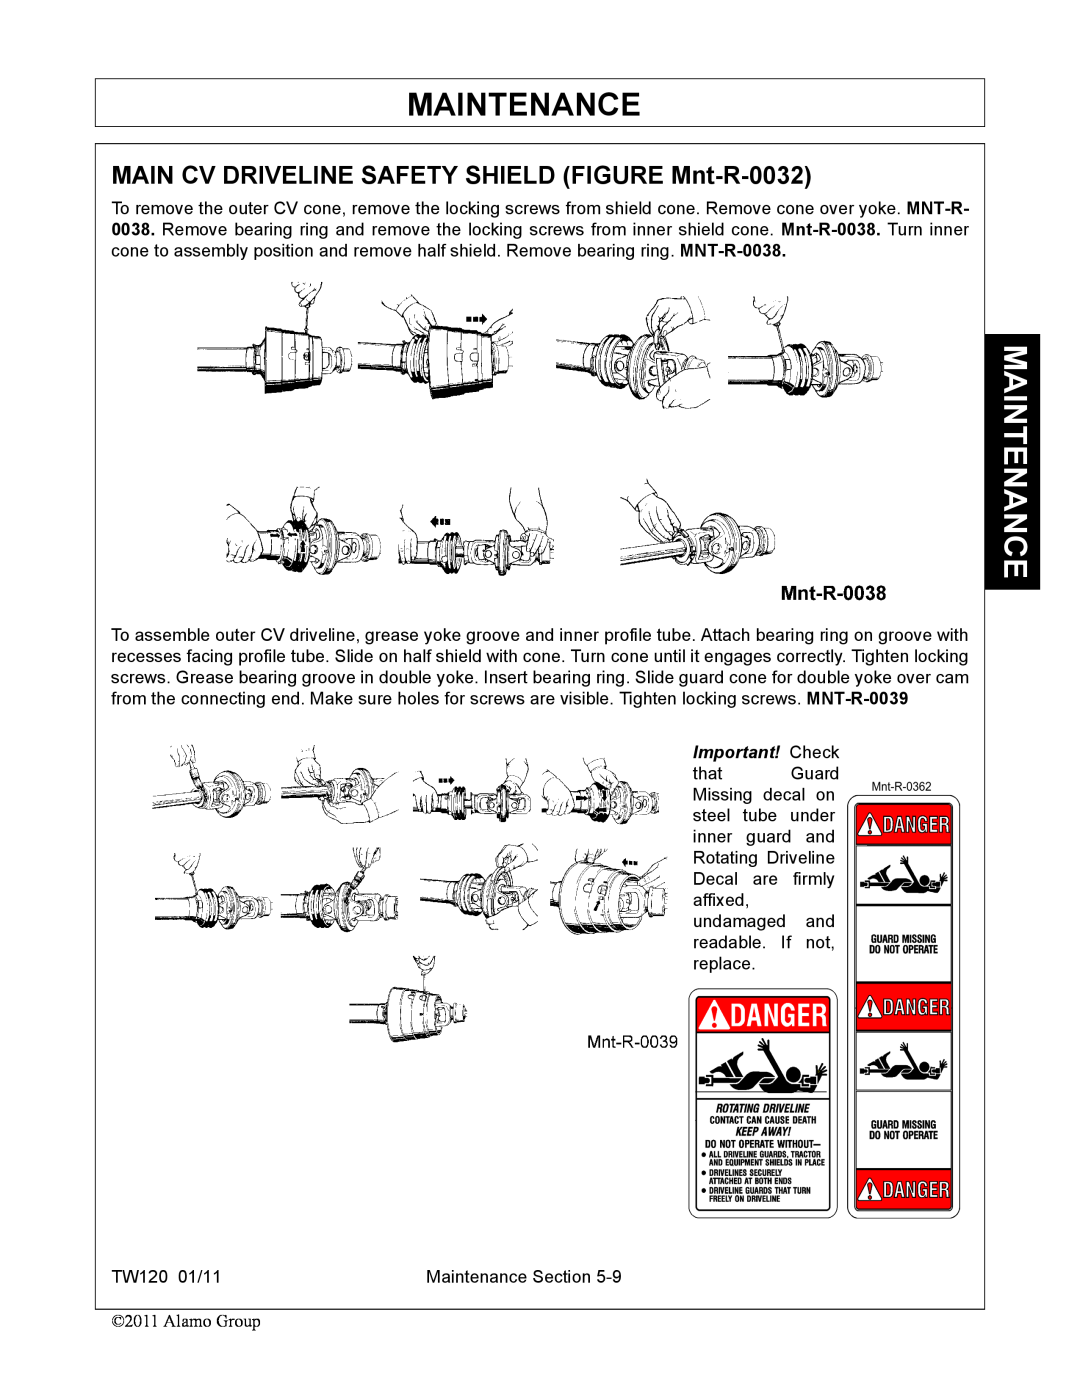 Blue Rhino FC-0025, FC-0024 manual MAIN CV DRIVELINE SAFETY SHIELD FIGURE Mnt-R-0032, Maintenance, Important! Check 